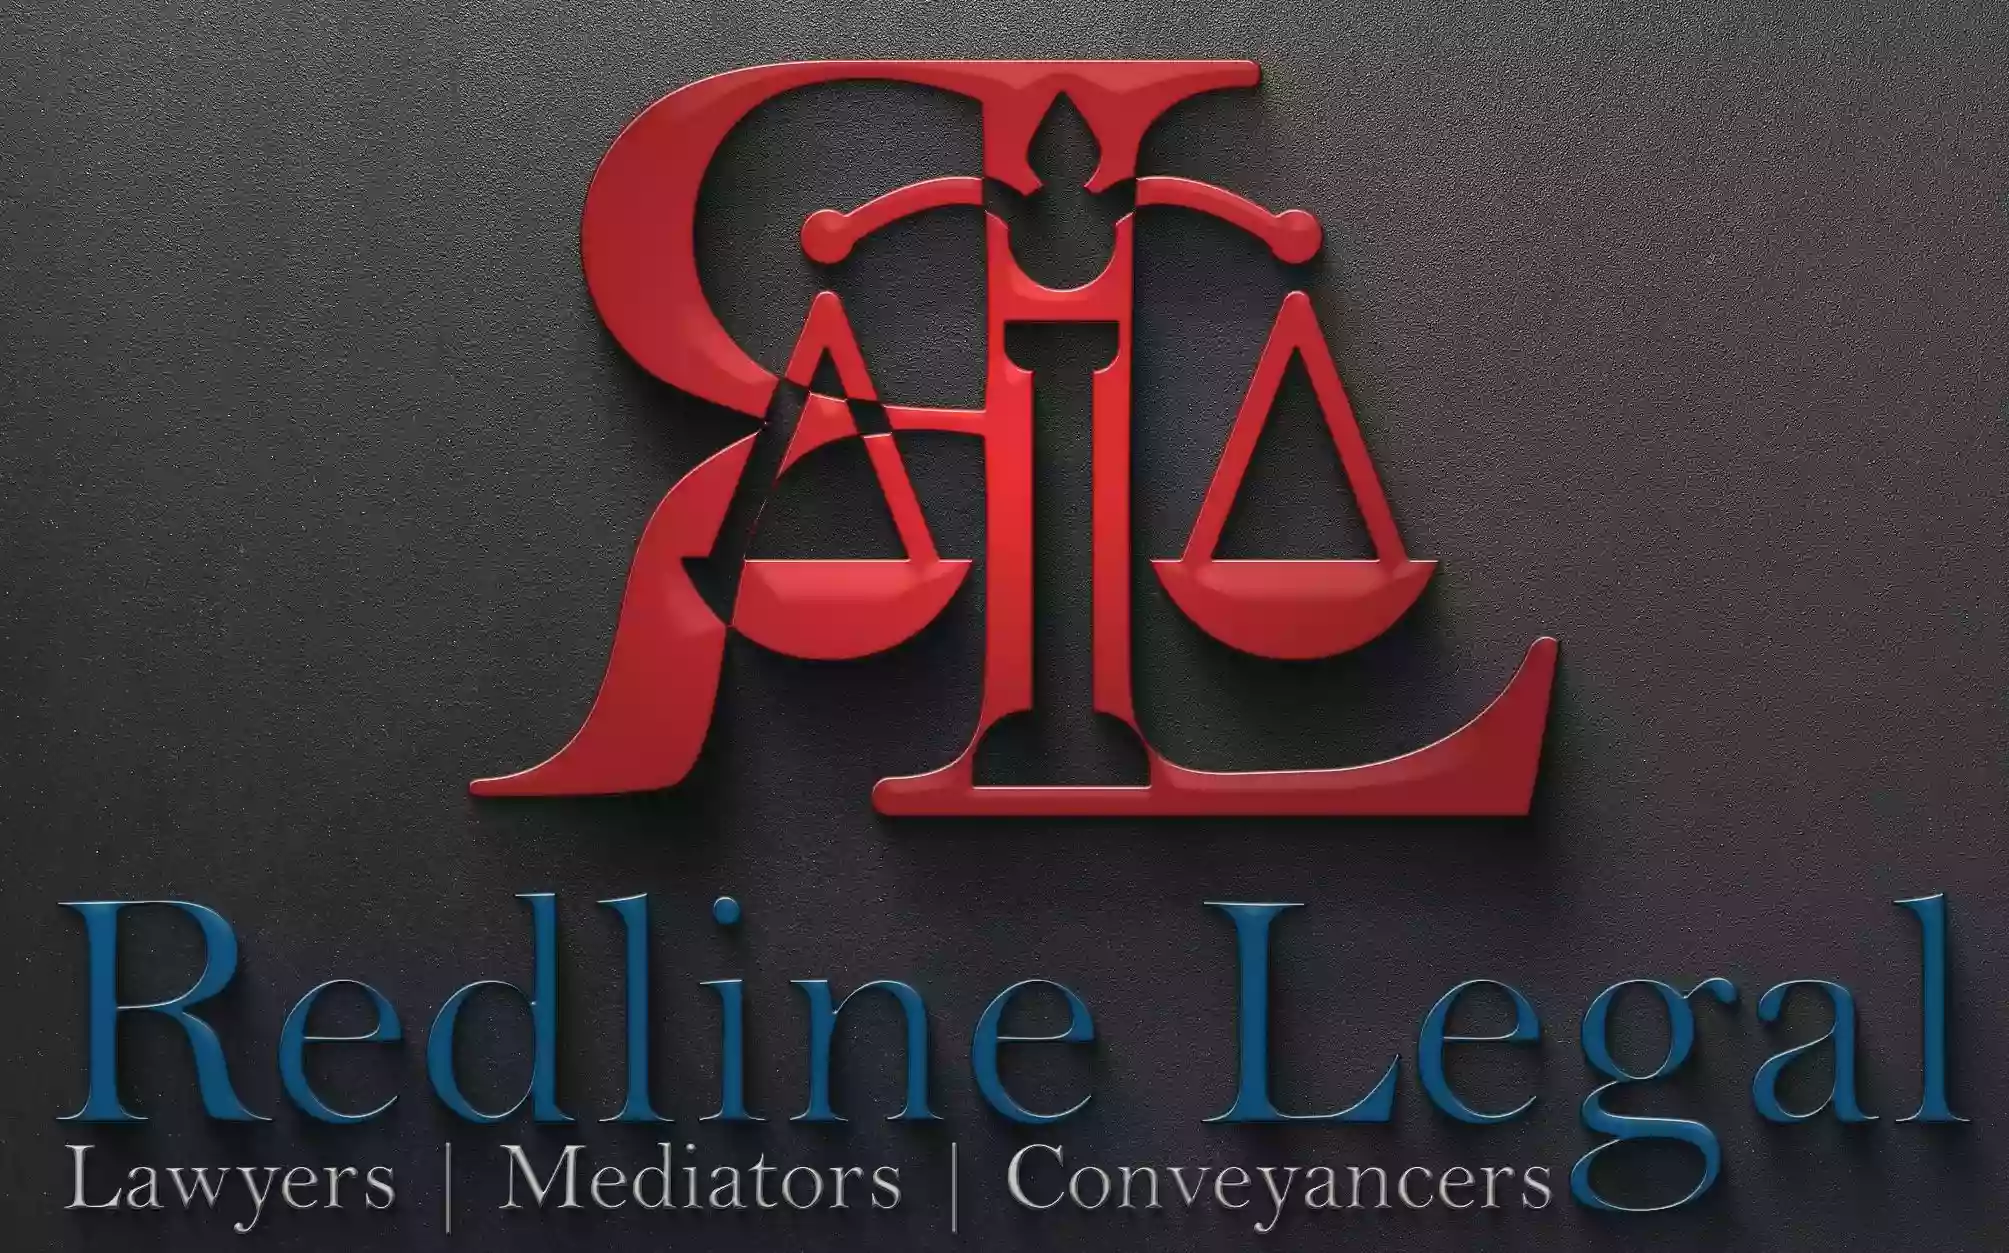 Redline Legal Lawyers